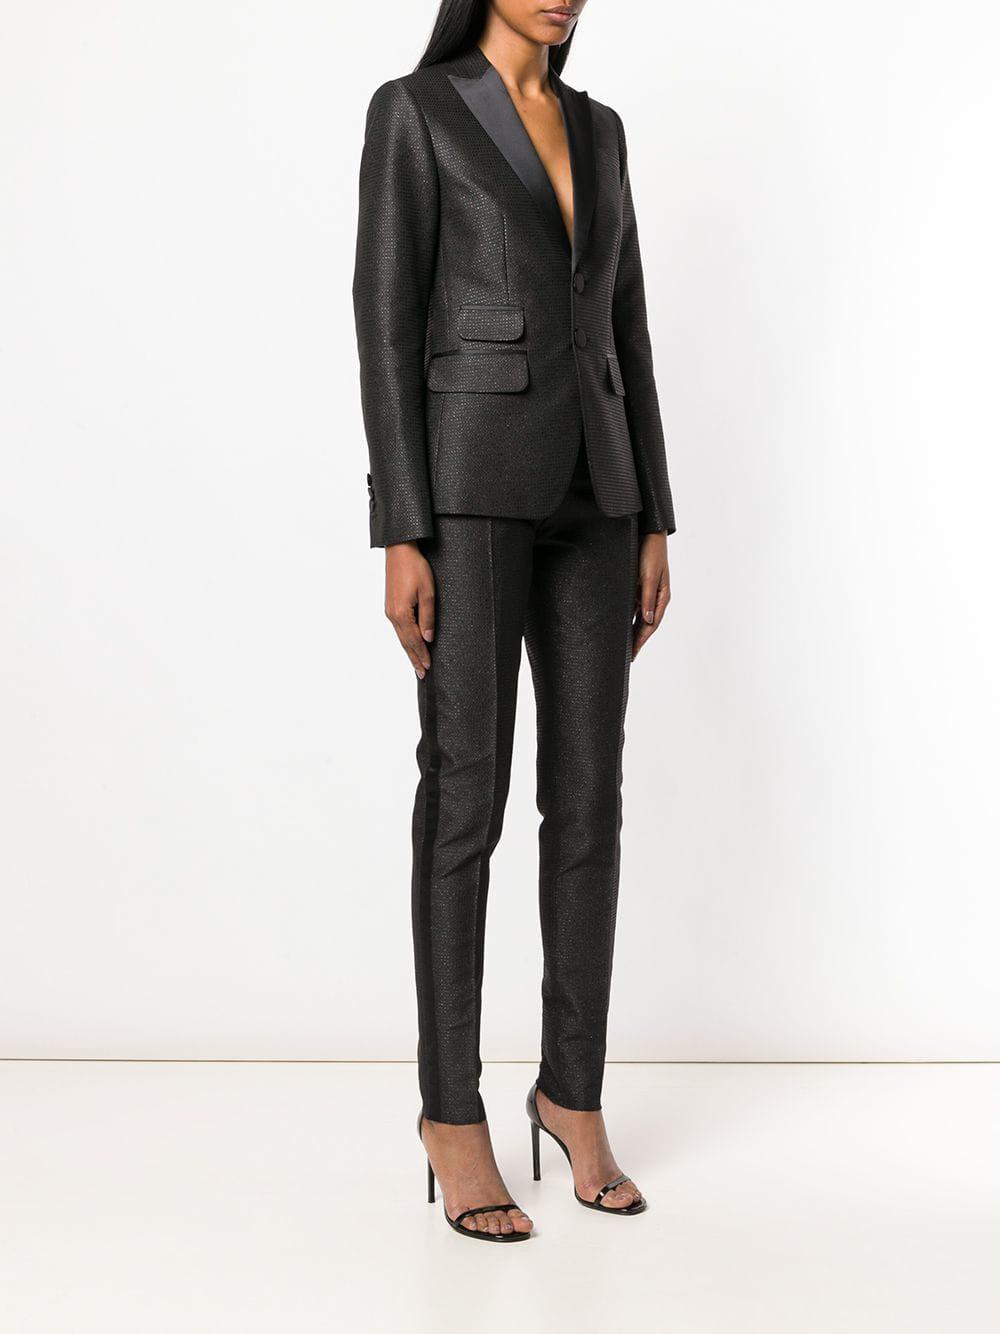 DSquared² Cotton Evening Suit in Black - Lyst